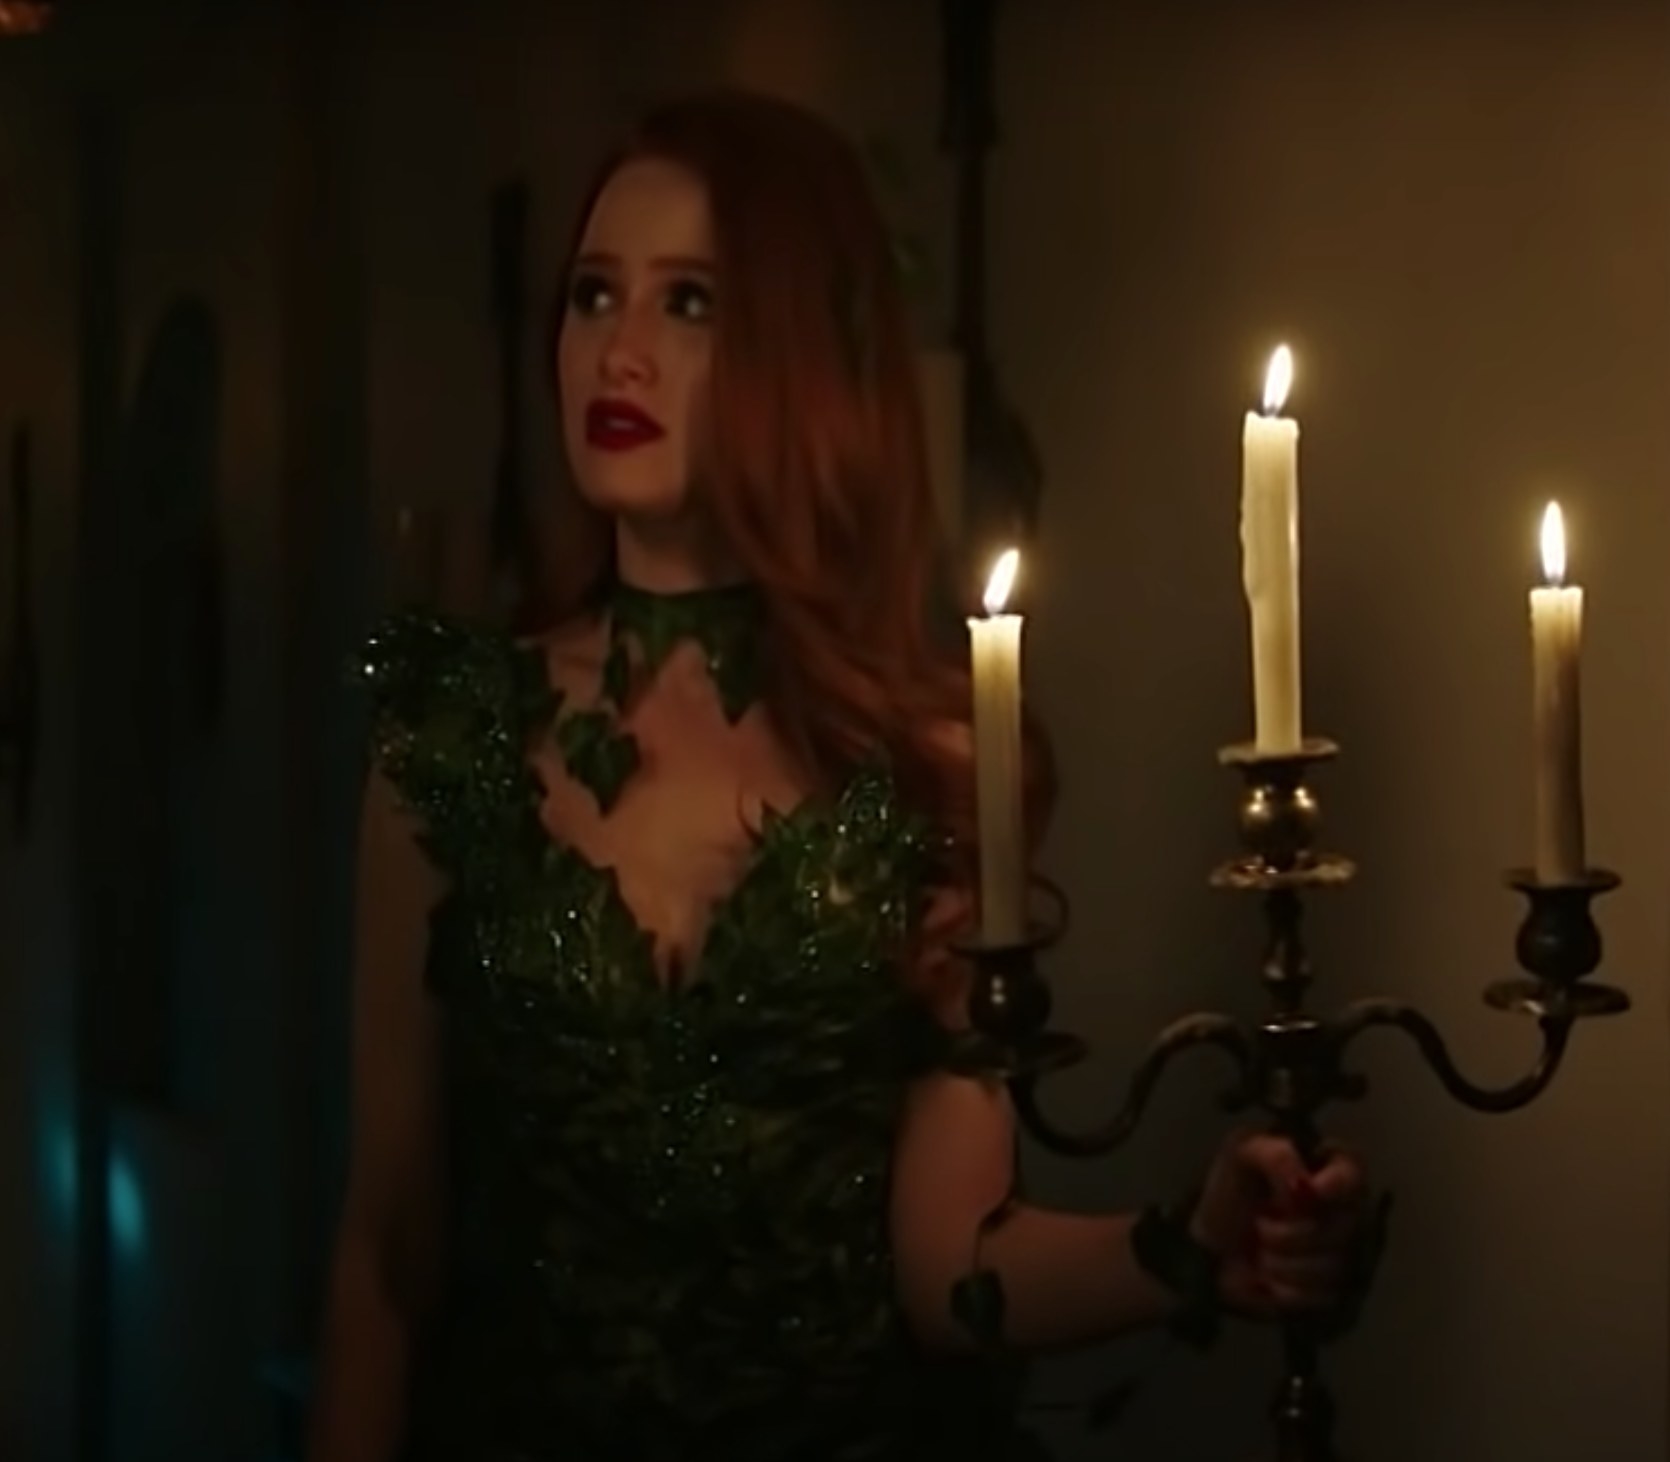 Cheryl dressed as Poison Ivy